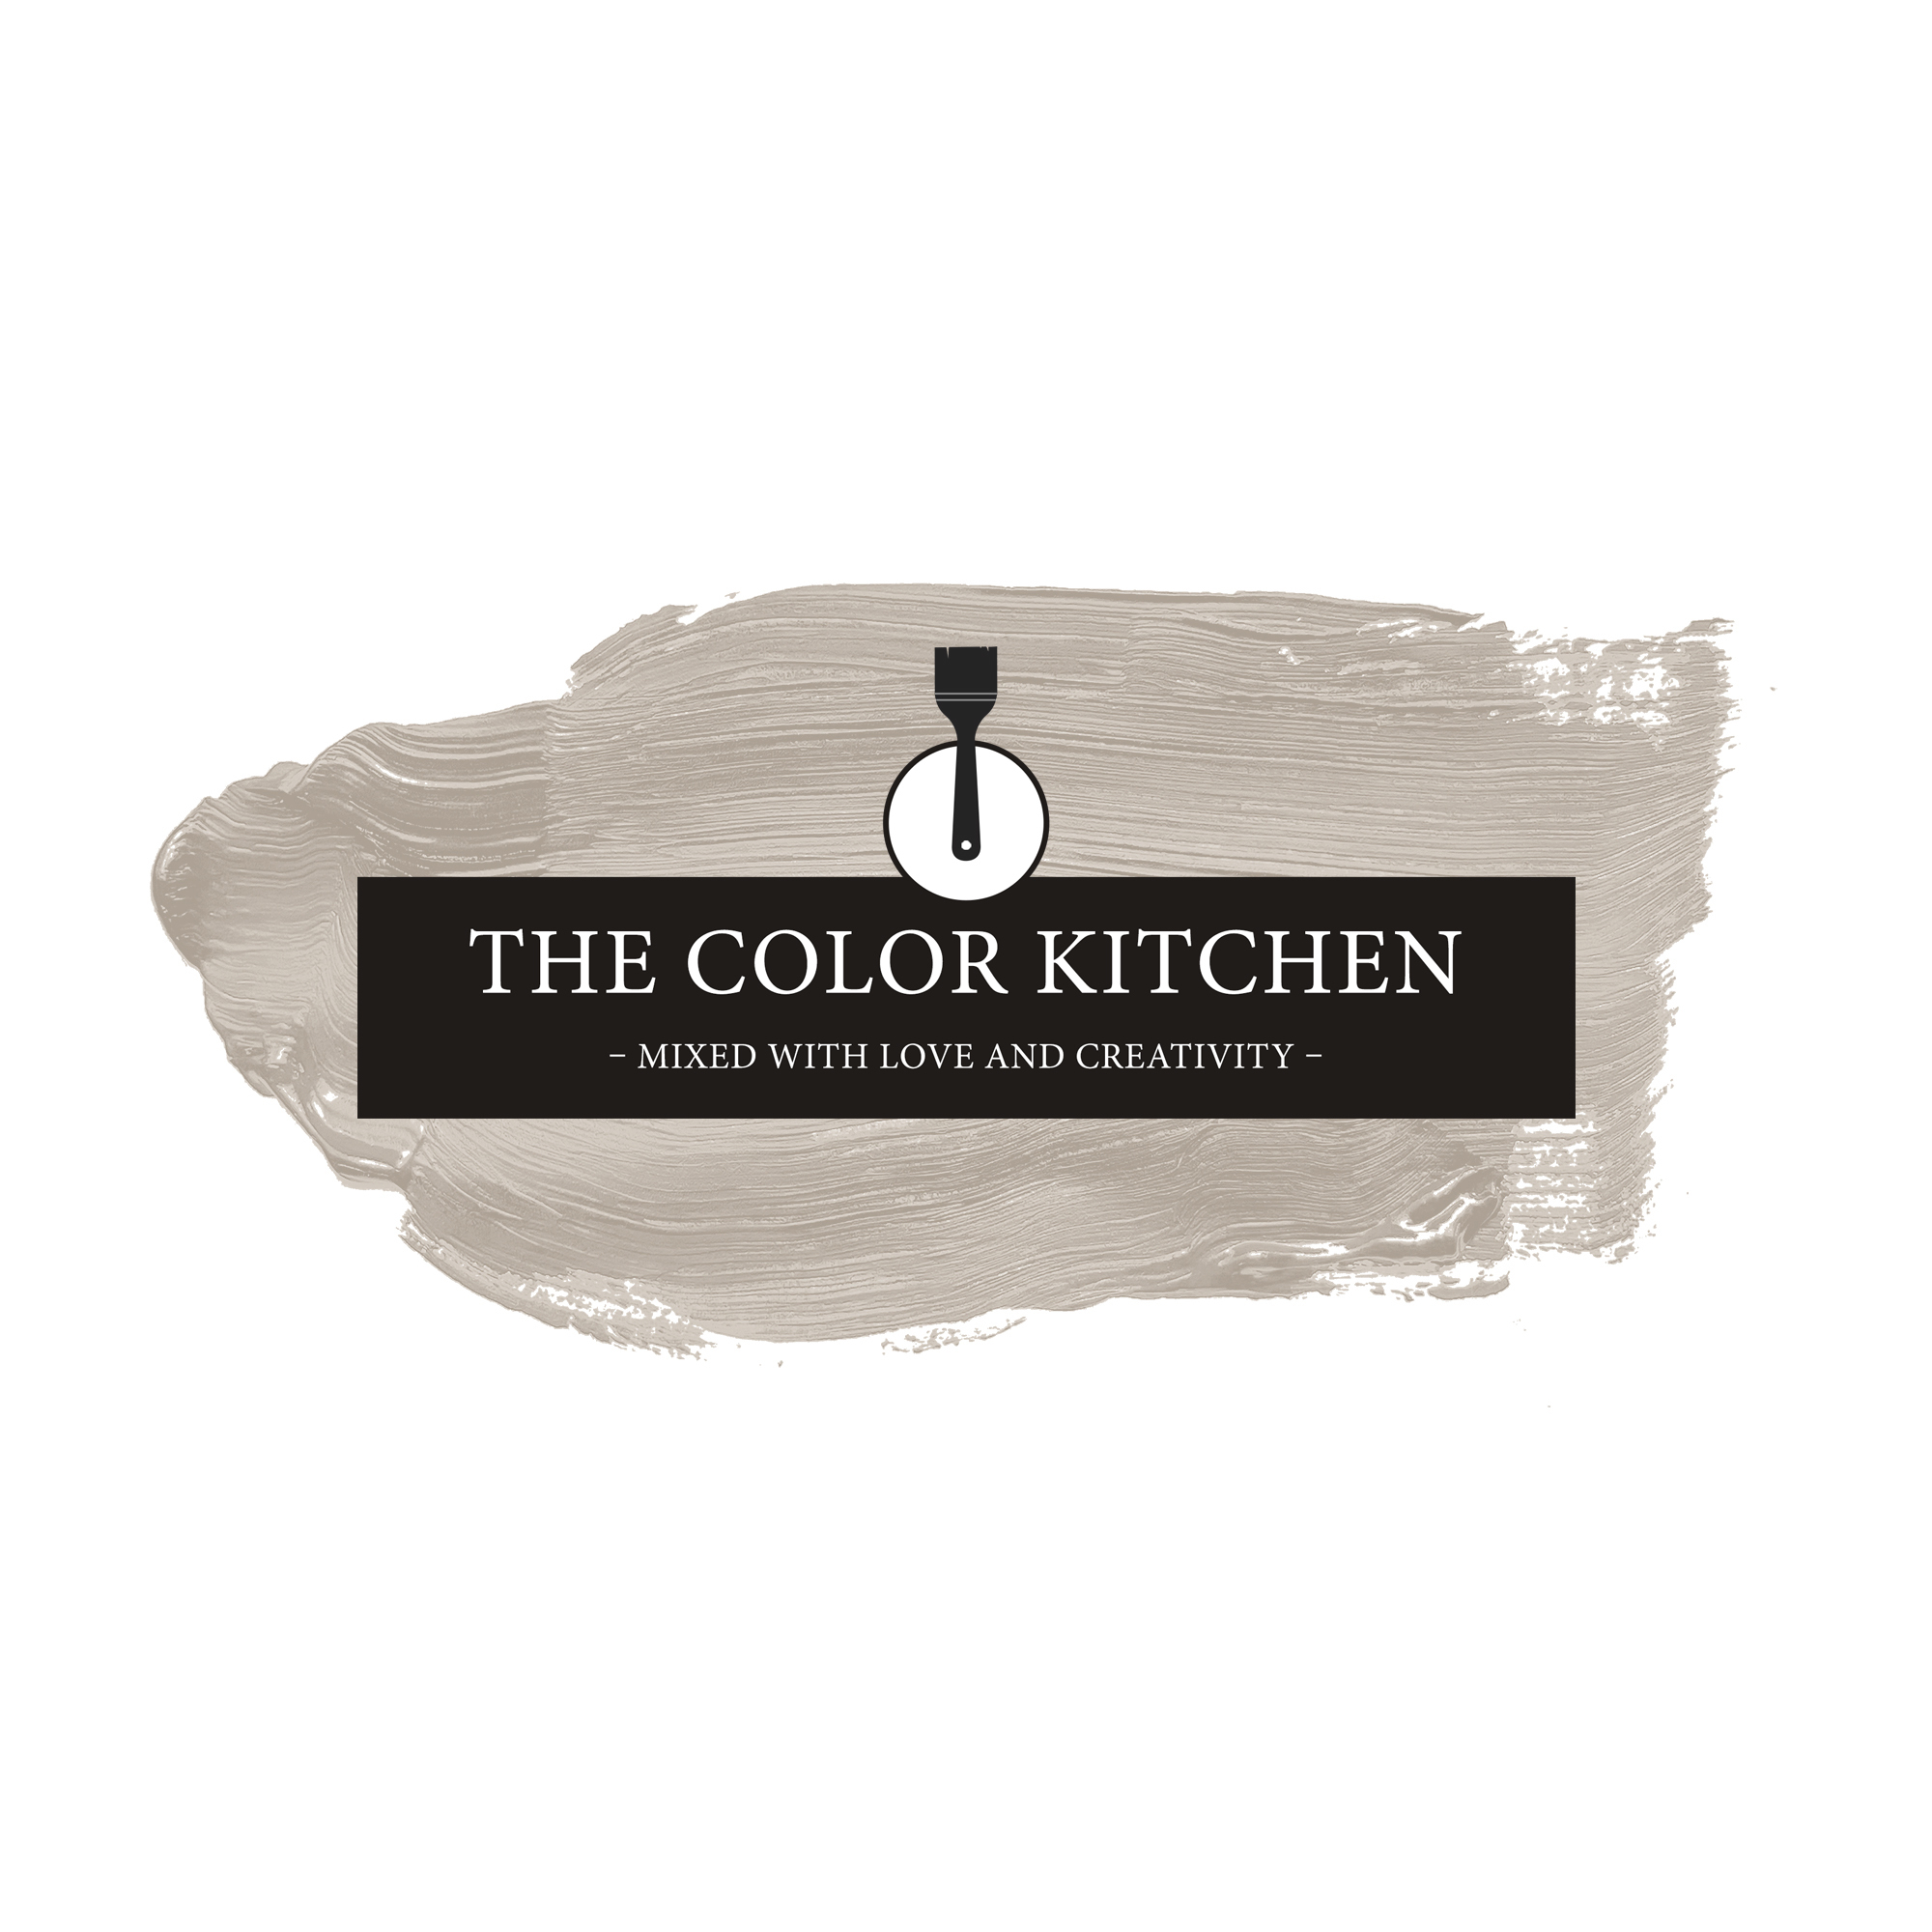 The Color Kitchen Oyster Mushroom 2,5 l